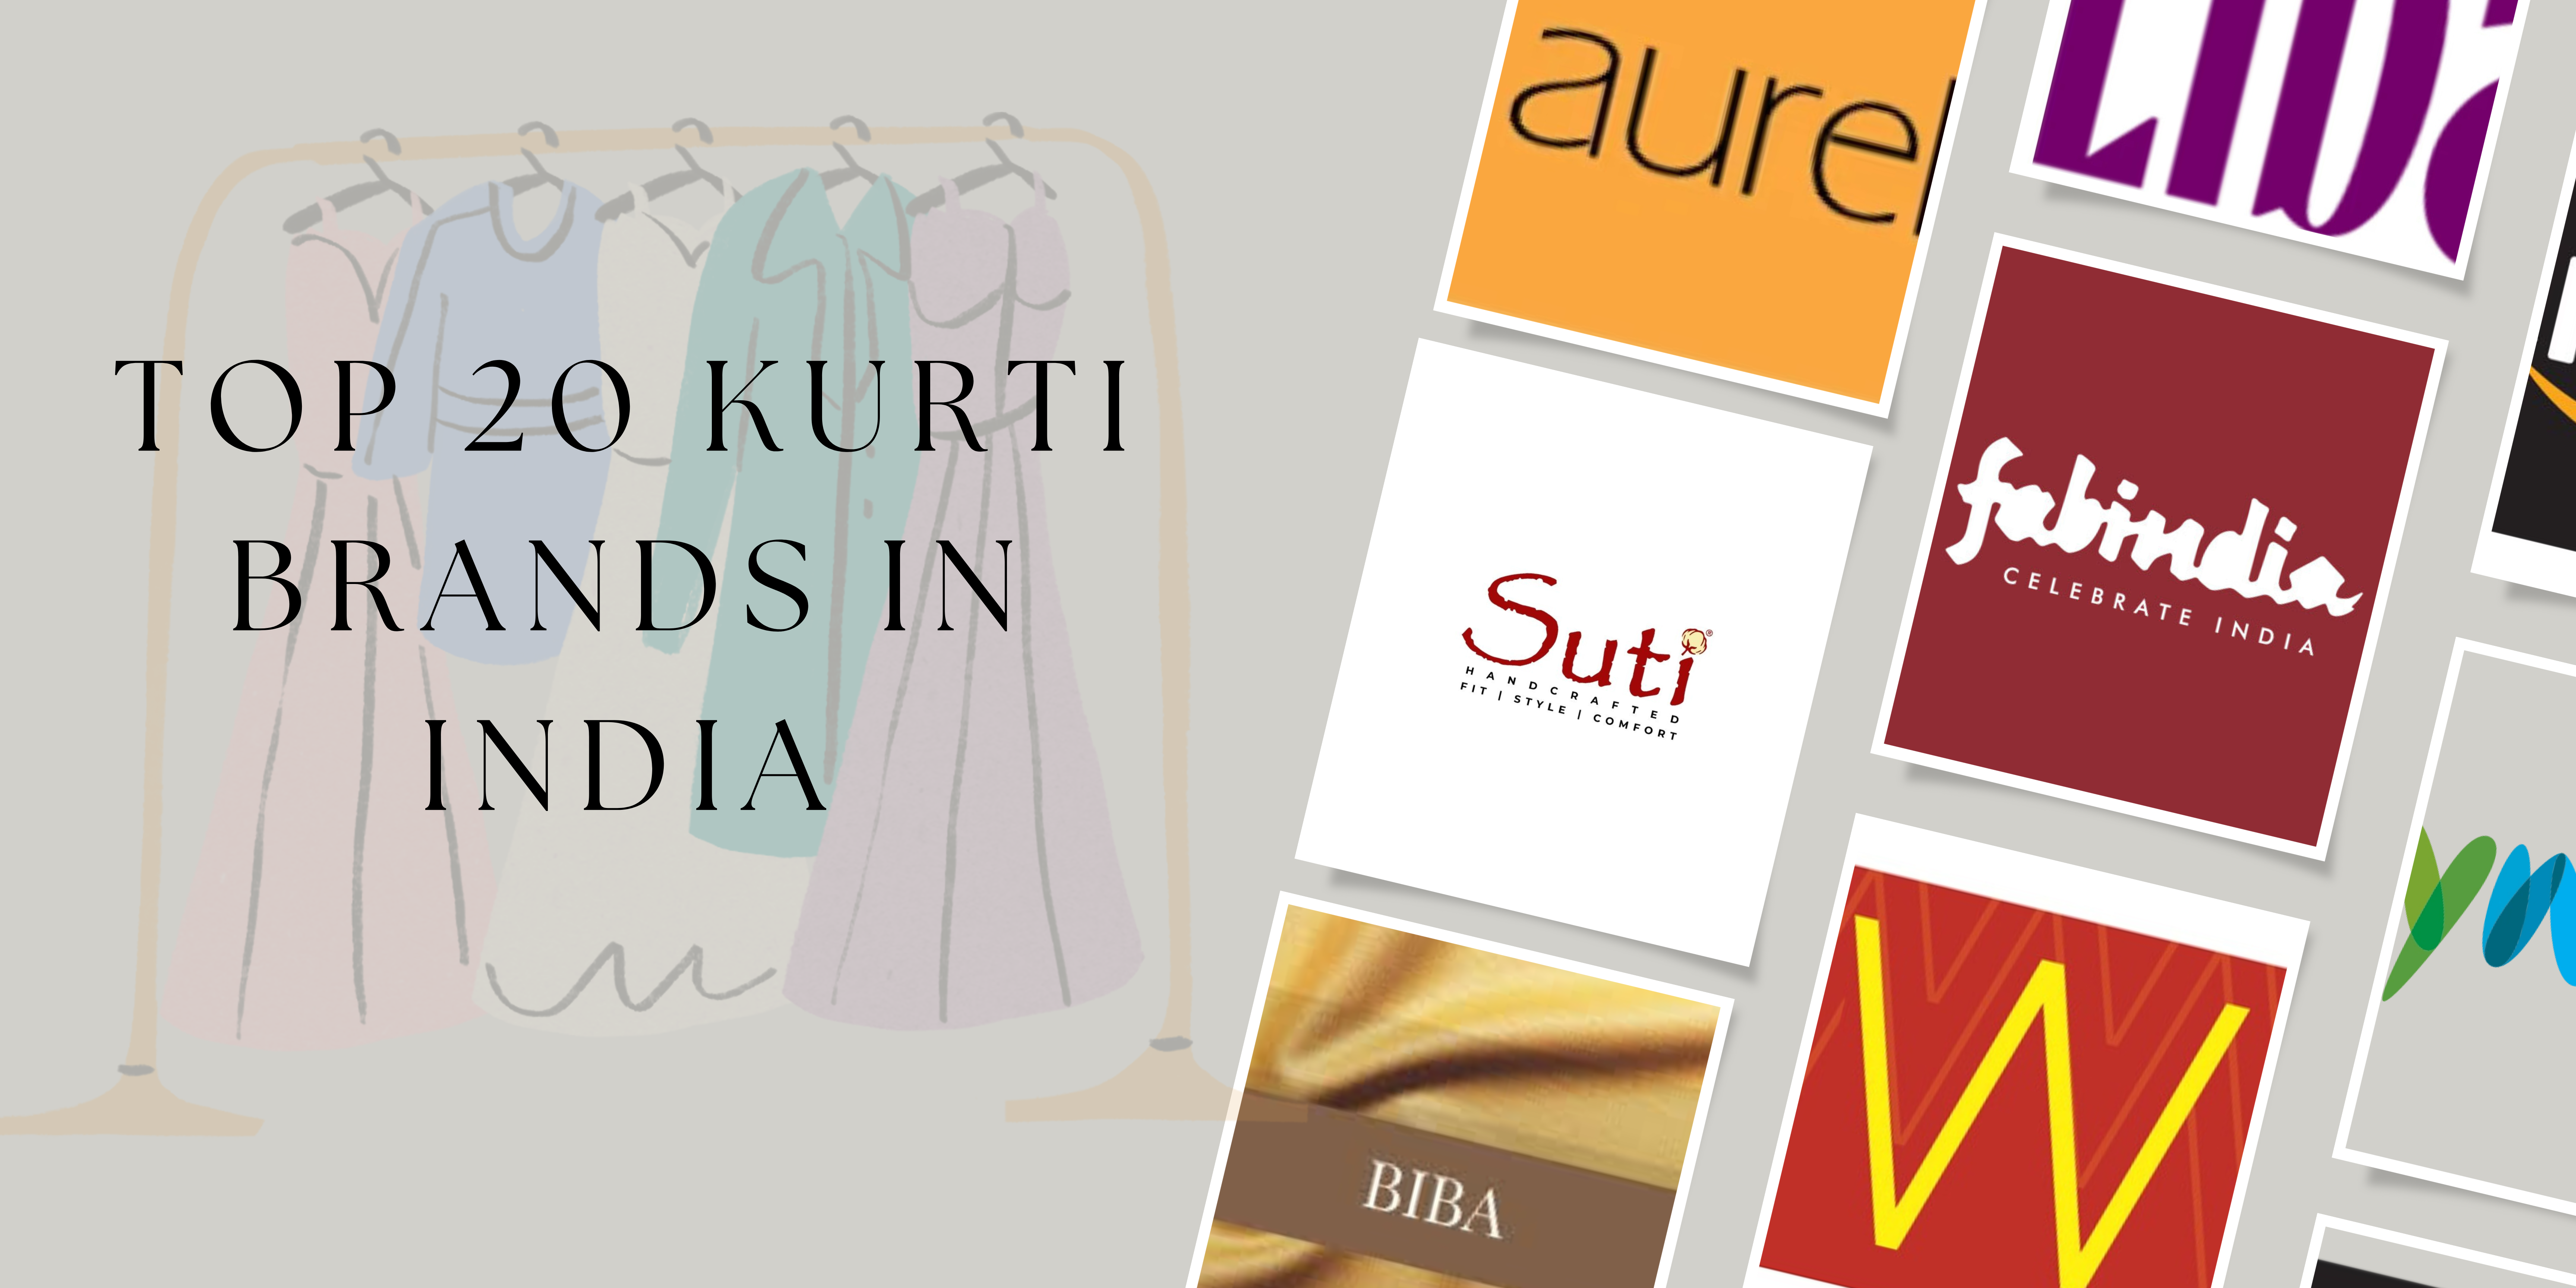 Top 20 Kurti Brands in India